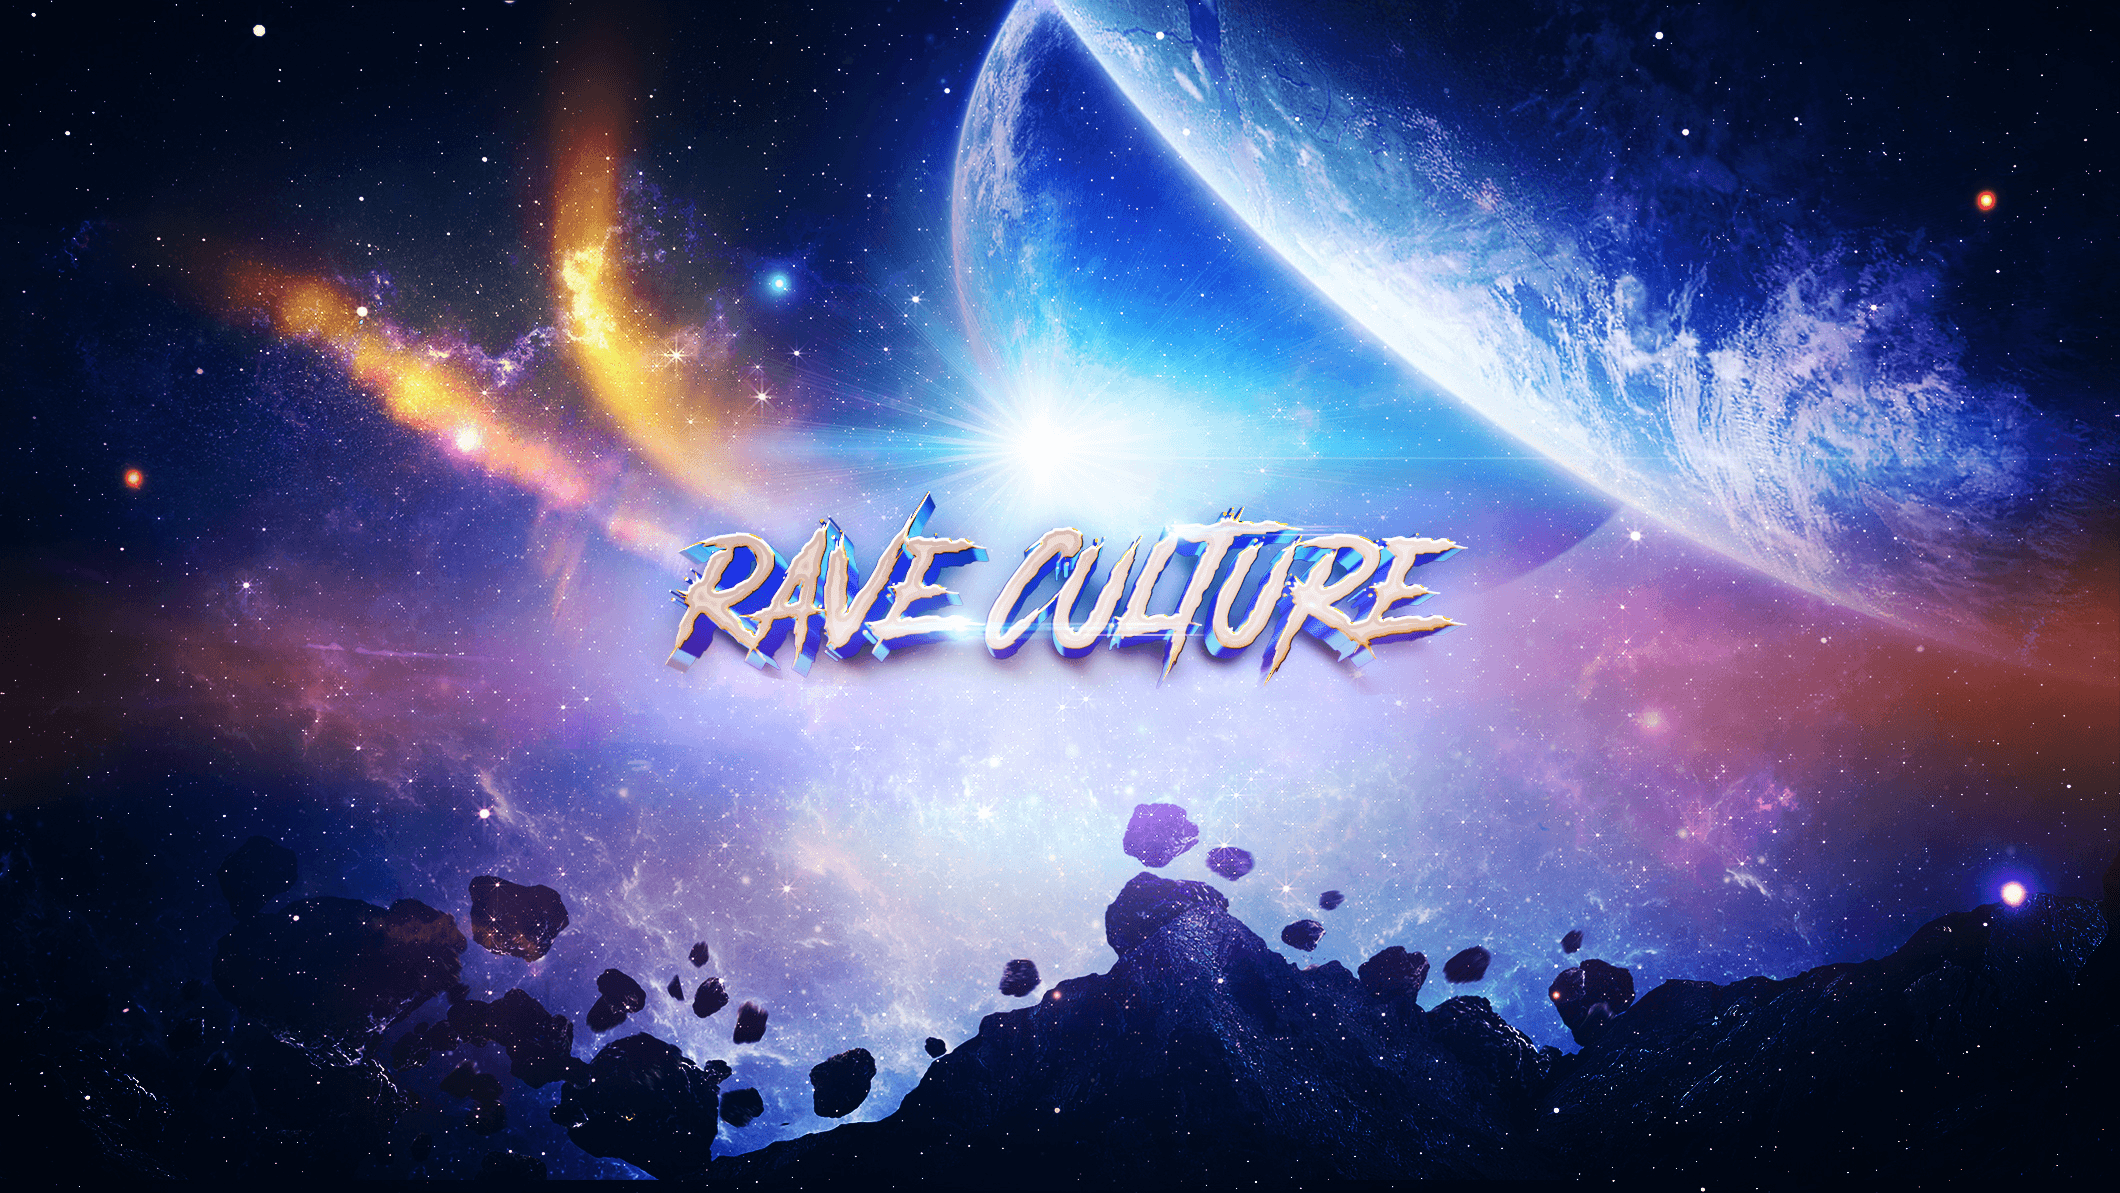 RaveCulture banner